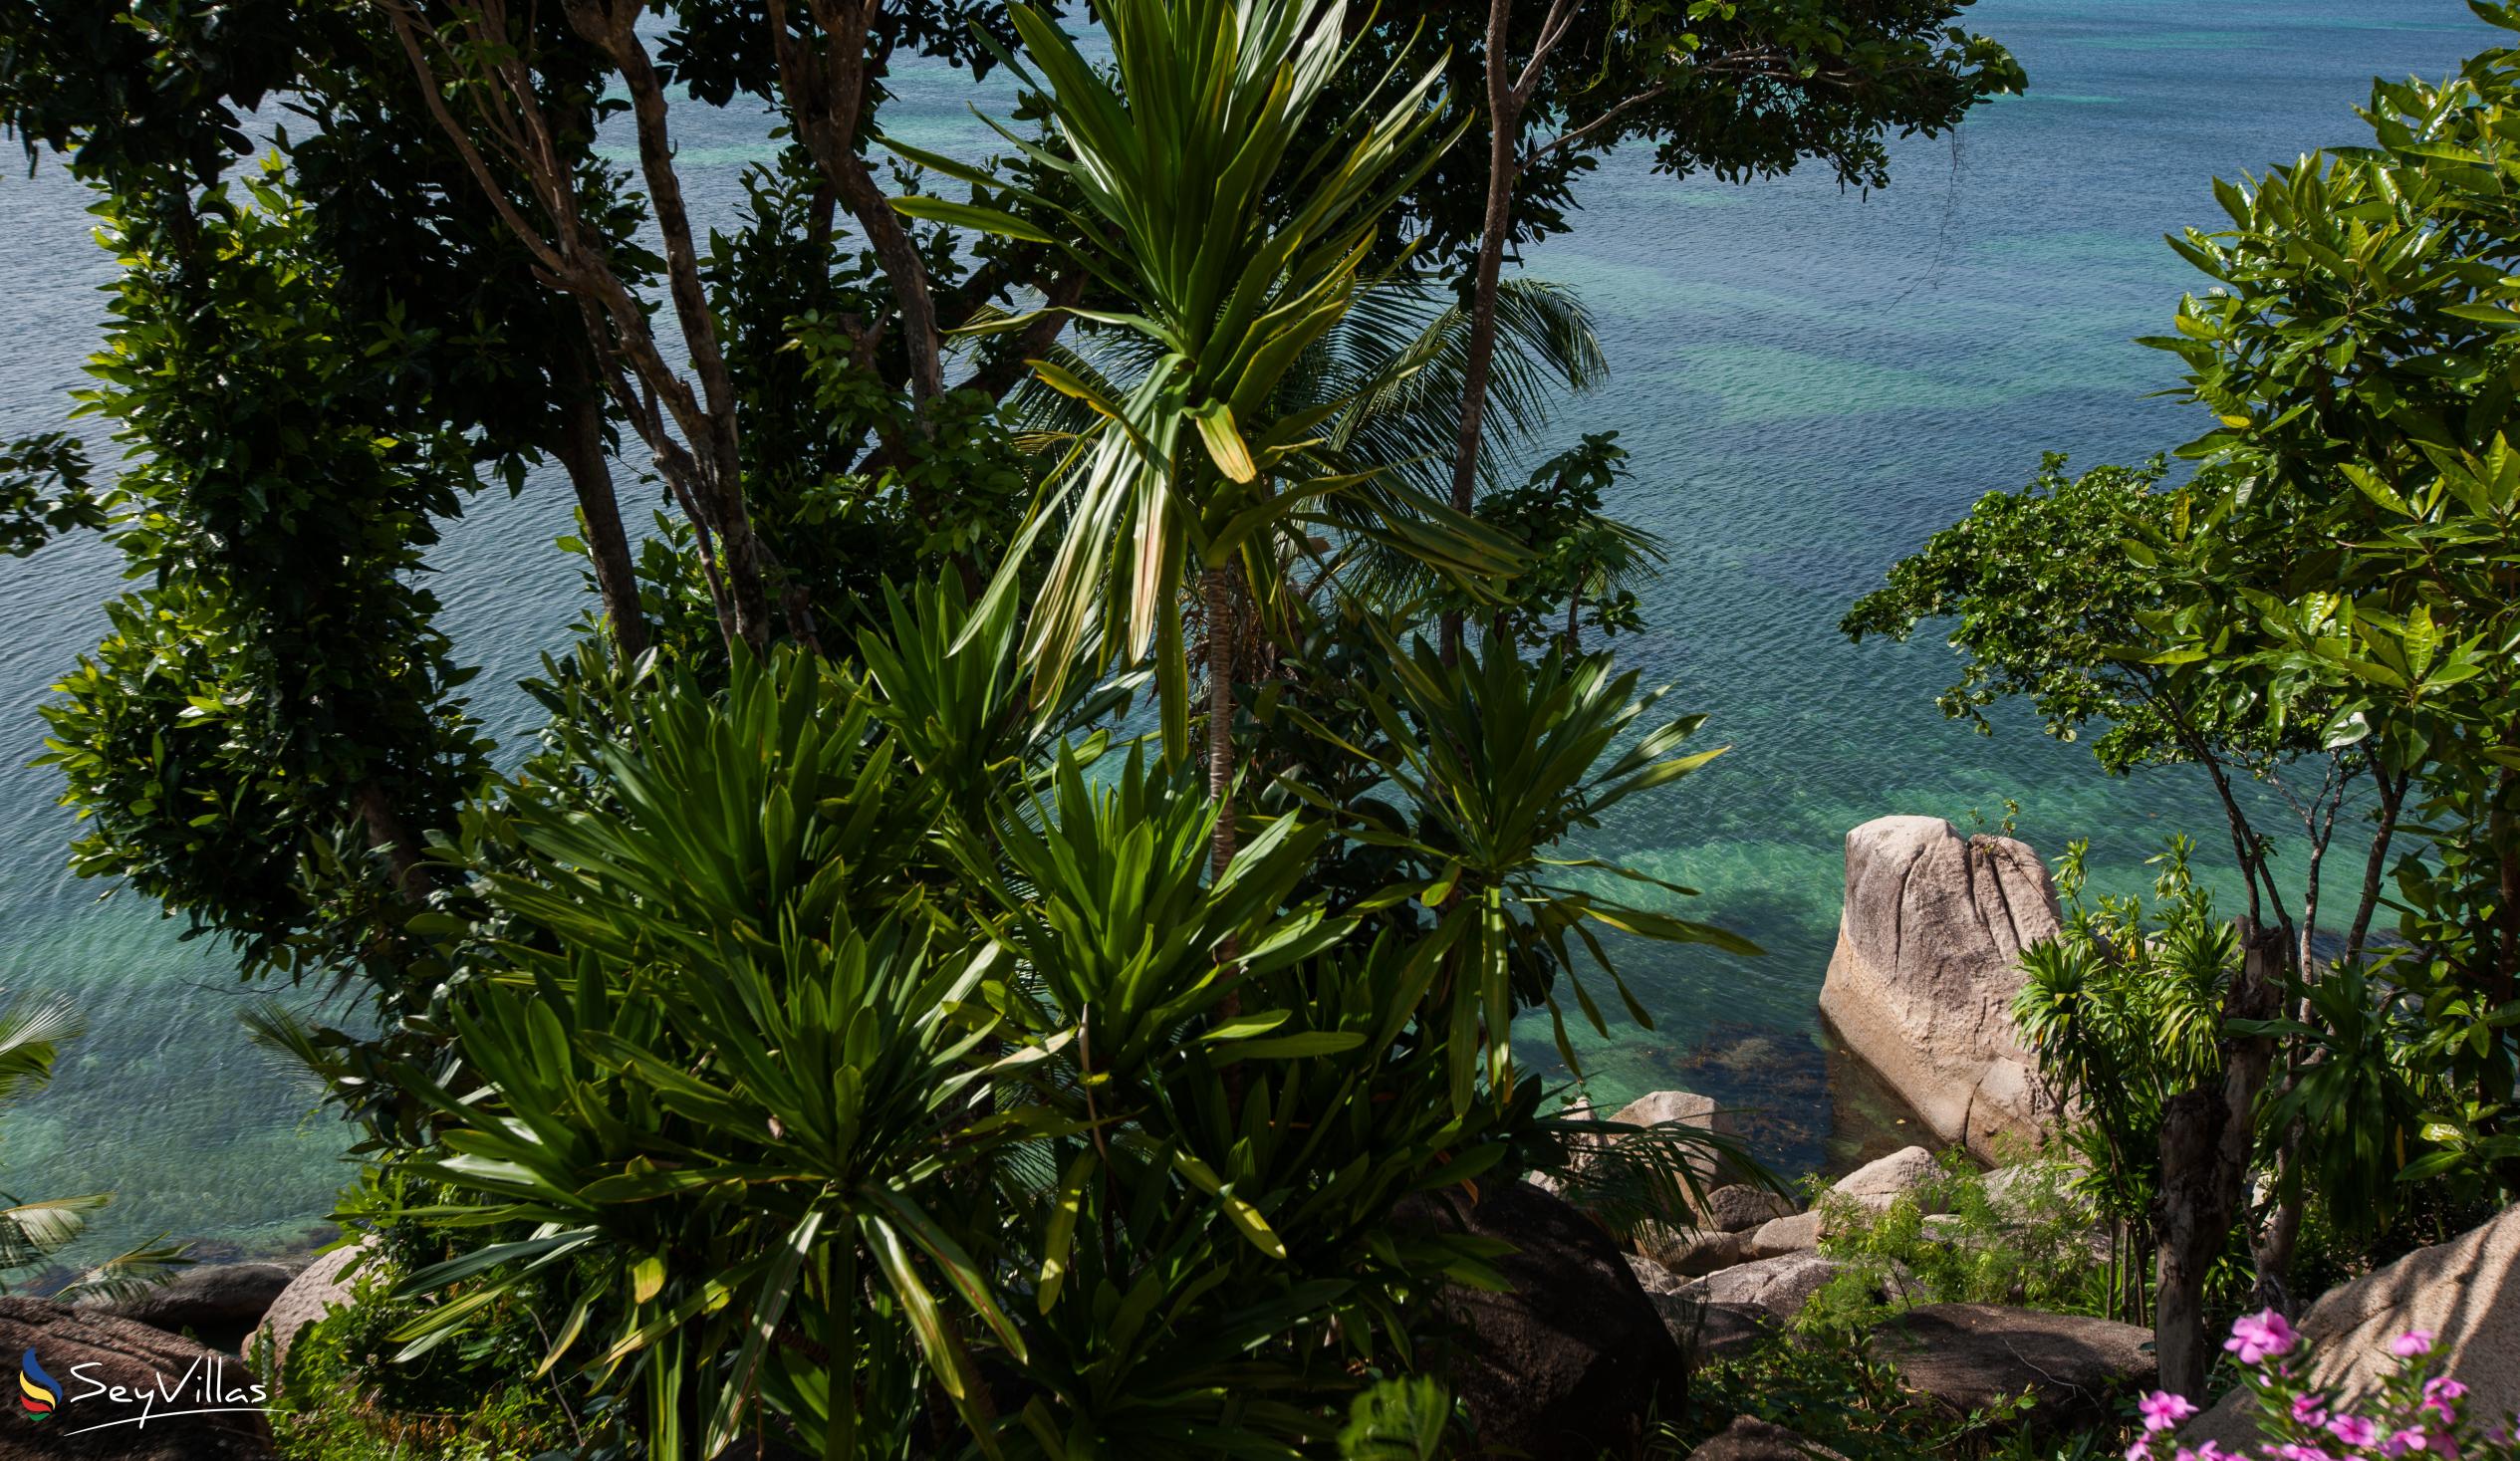 Foto 47: Coco de Mer & Black Parrot Suites - Location - Praslin (Seychelles)